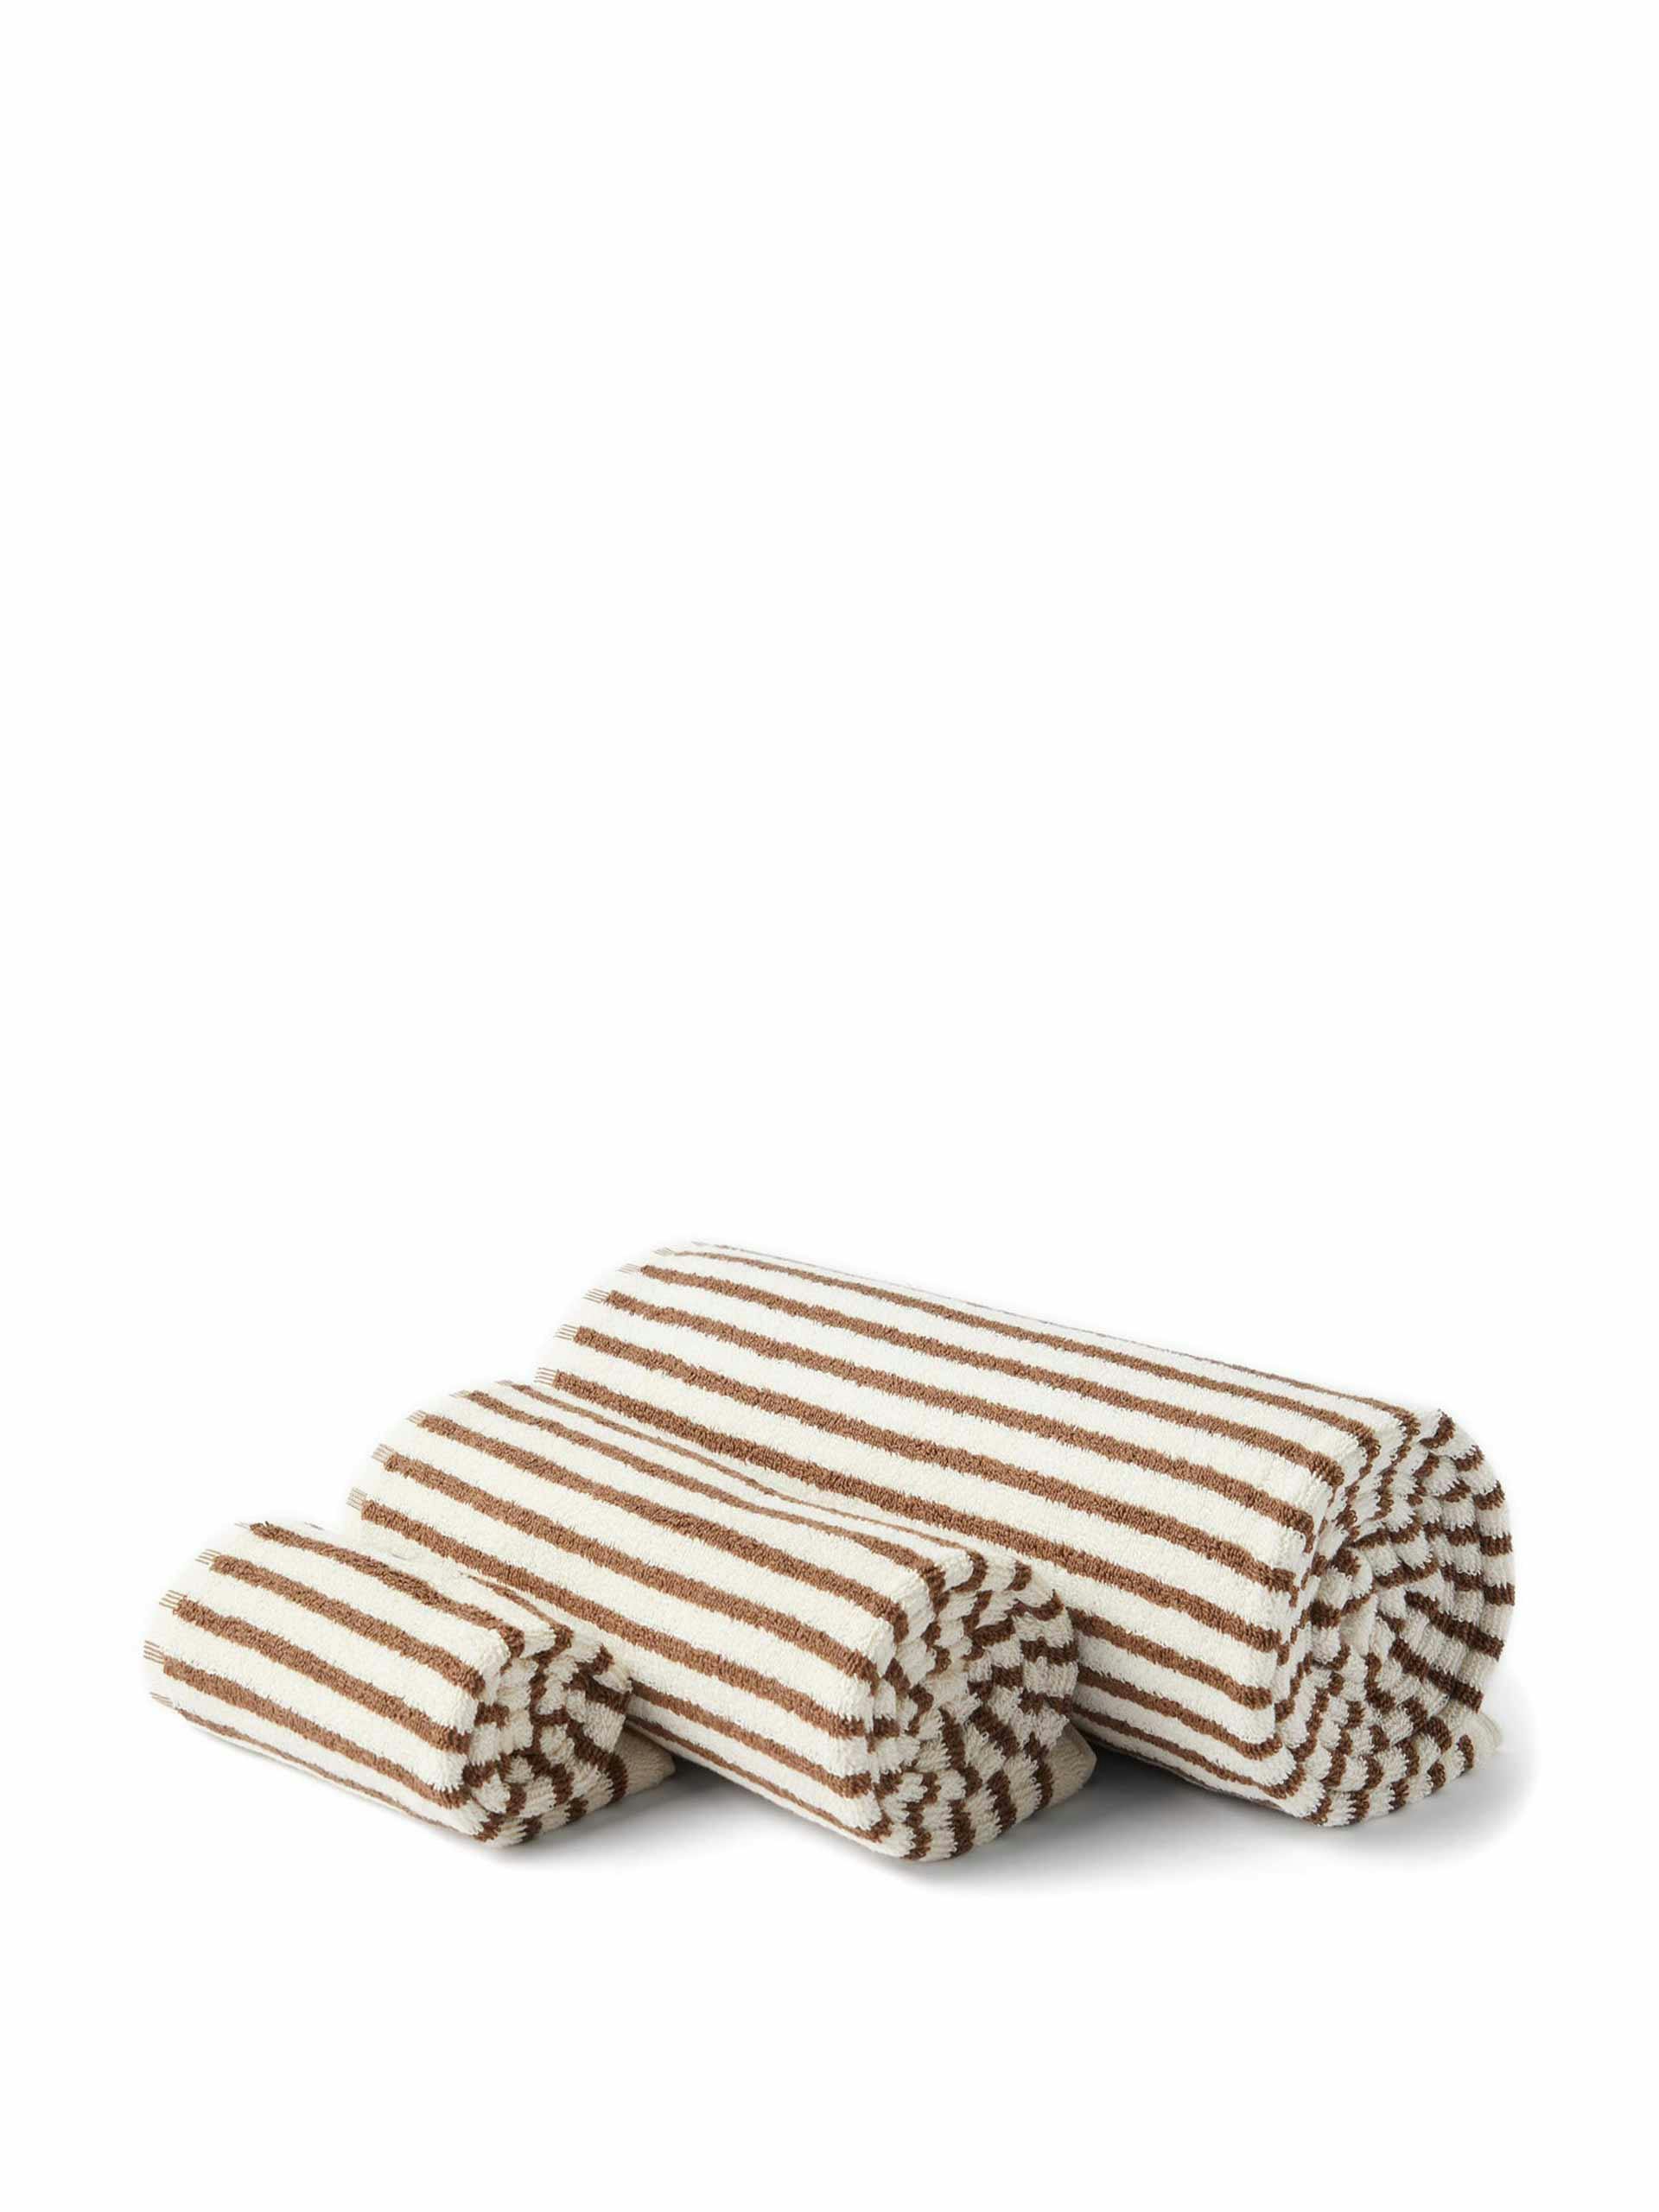 Cream striped organic-cotton towels - set of 3